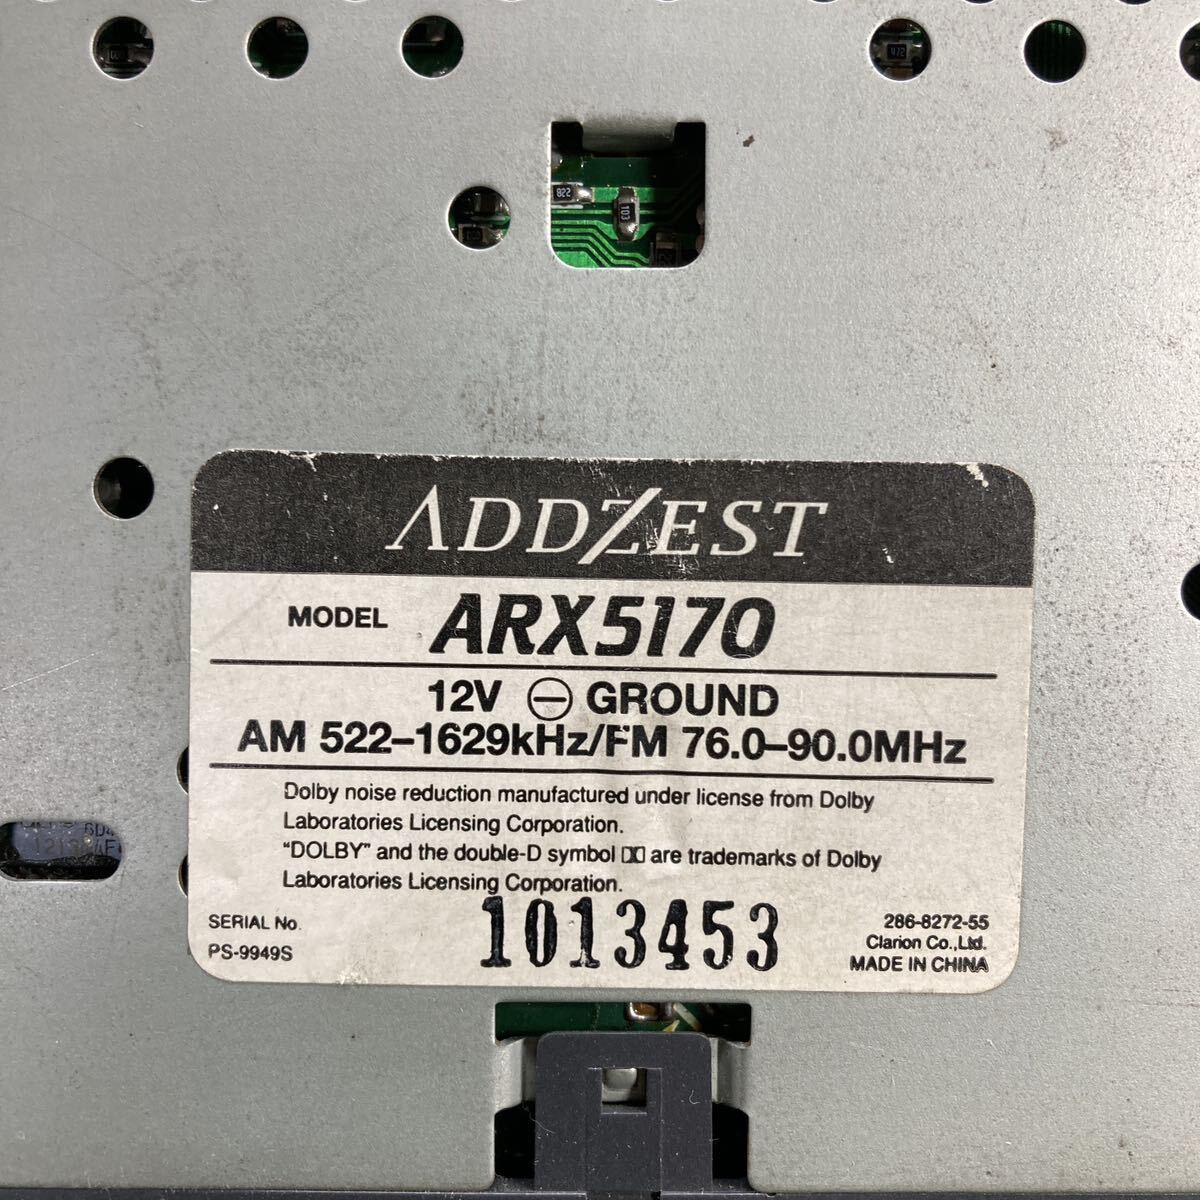 AV4-221 super-discount car stereo ADDZEST clarion ARX5170 1013453 cassette tape deck electrification not yet verification Junk 